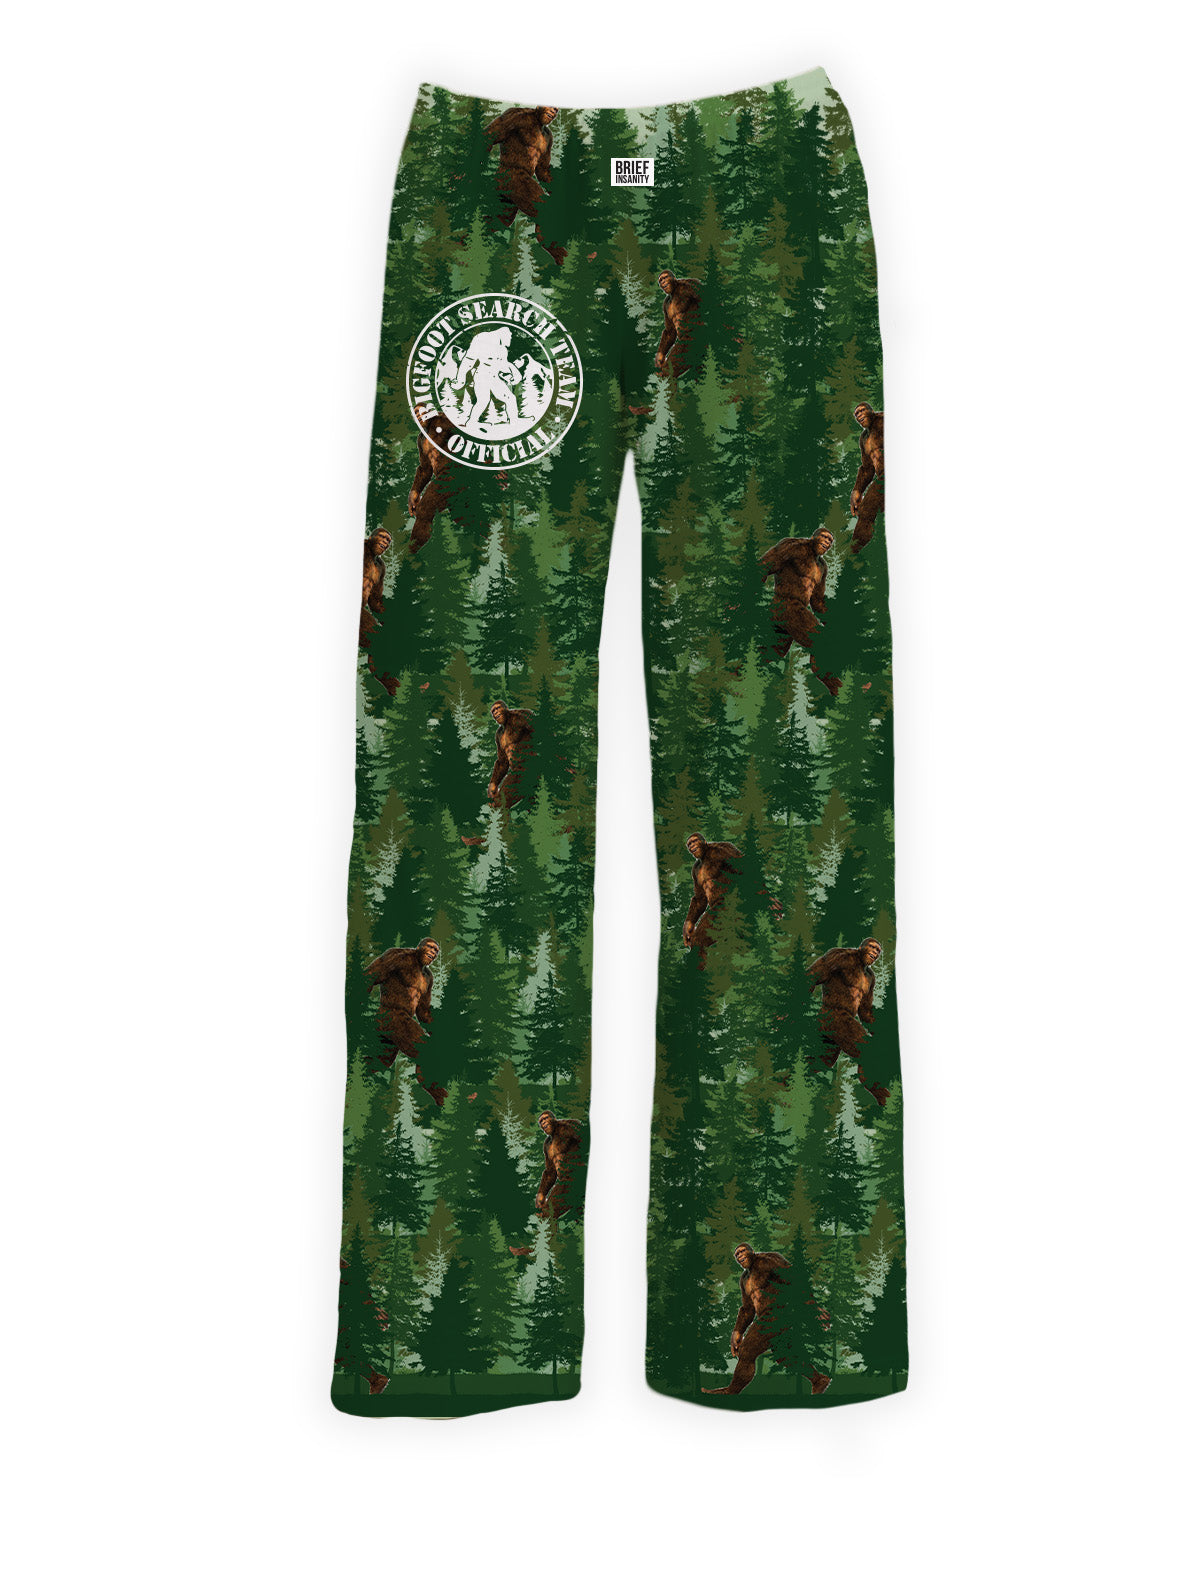 BRIEF INSANITY's Bigfoot Search Team Pajama Lounge Pants